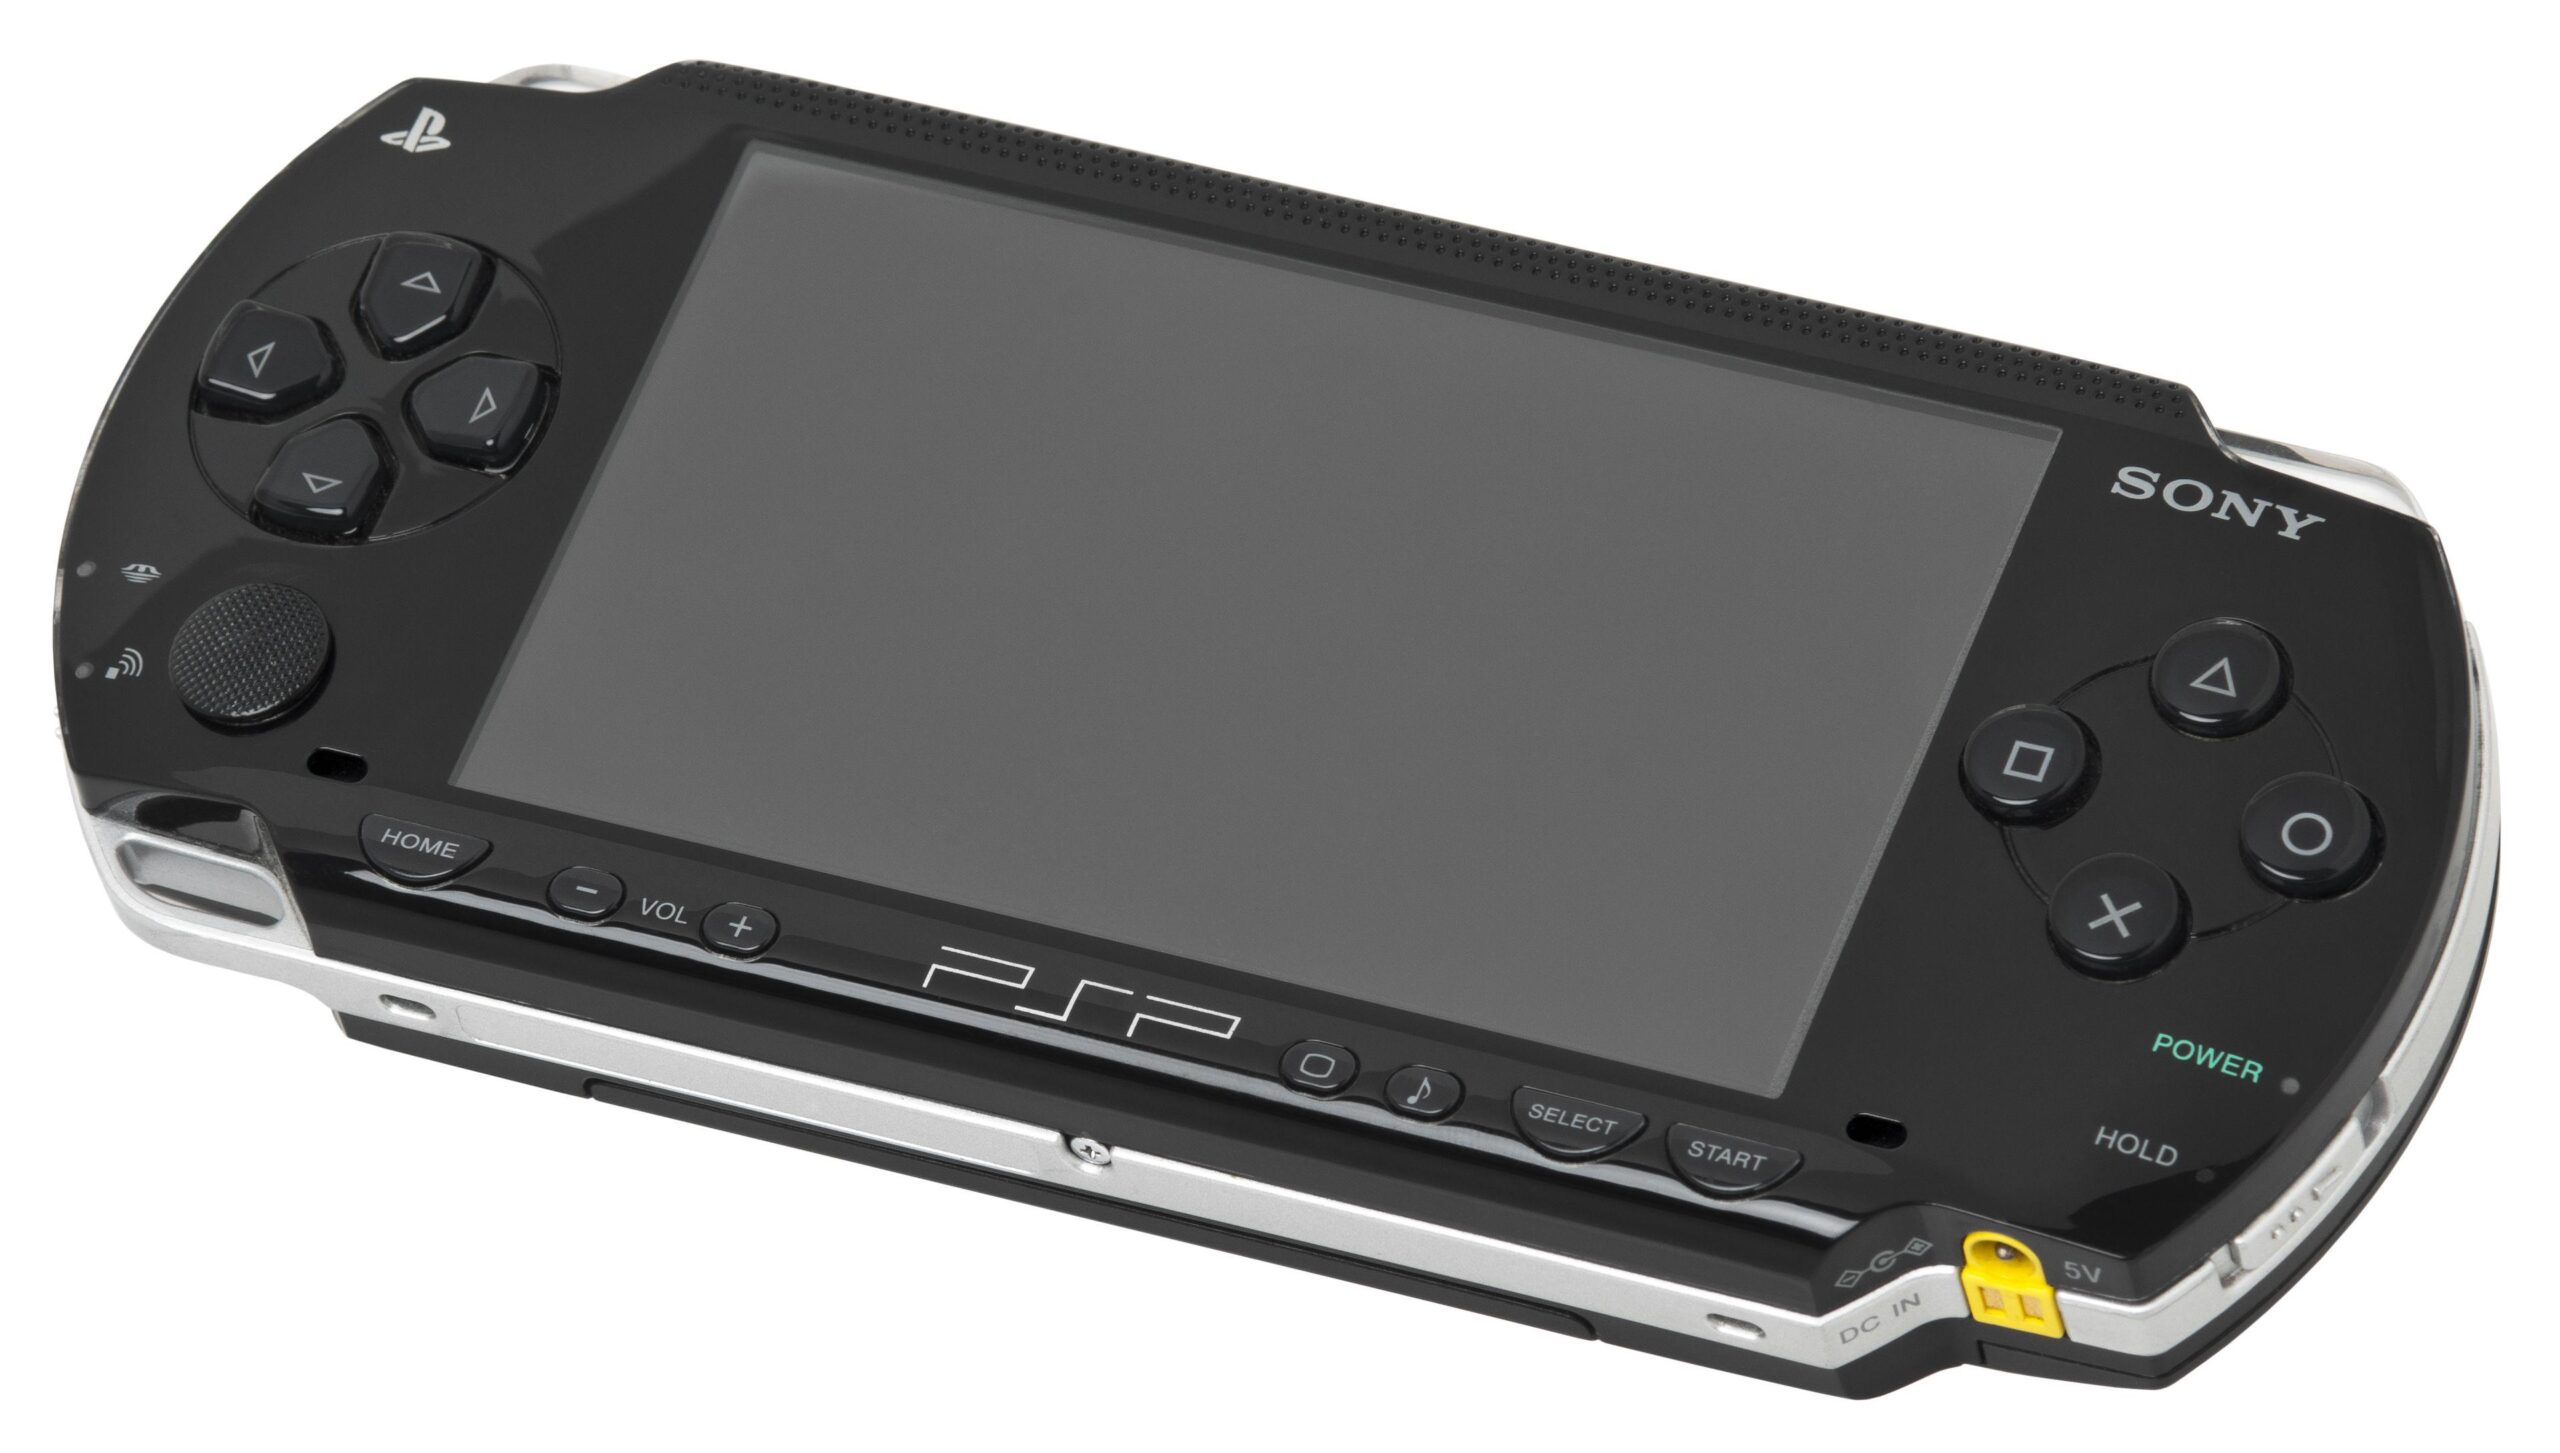 Migliori emulatori per PSP disponibili per PC